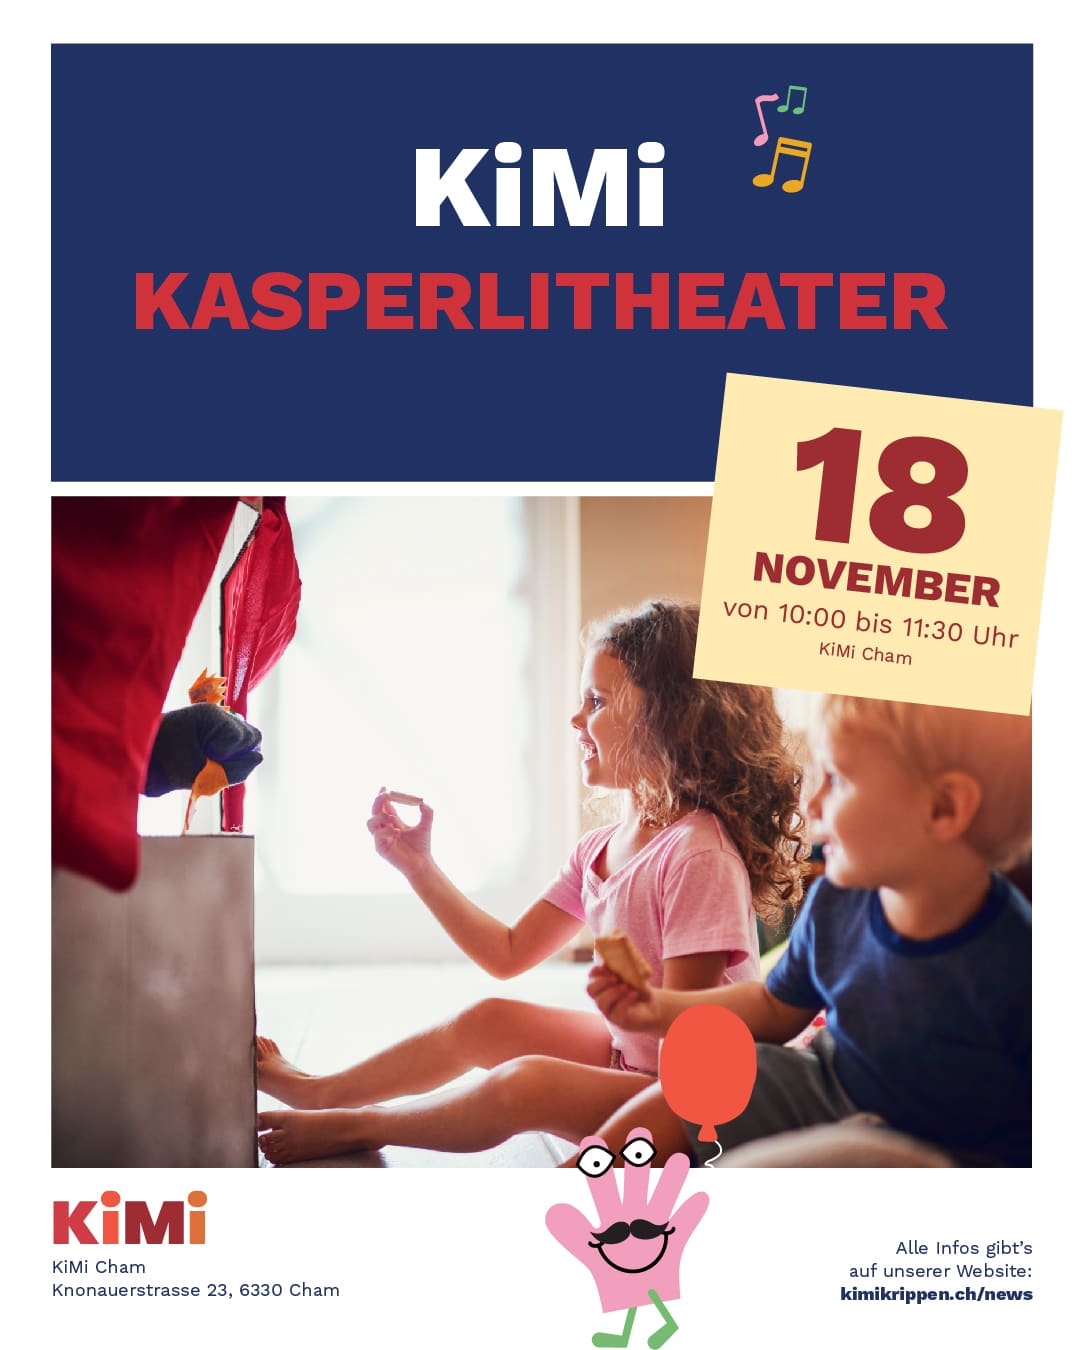 Kasperlitheater Cham